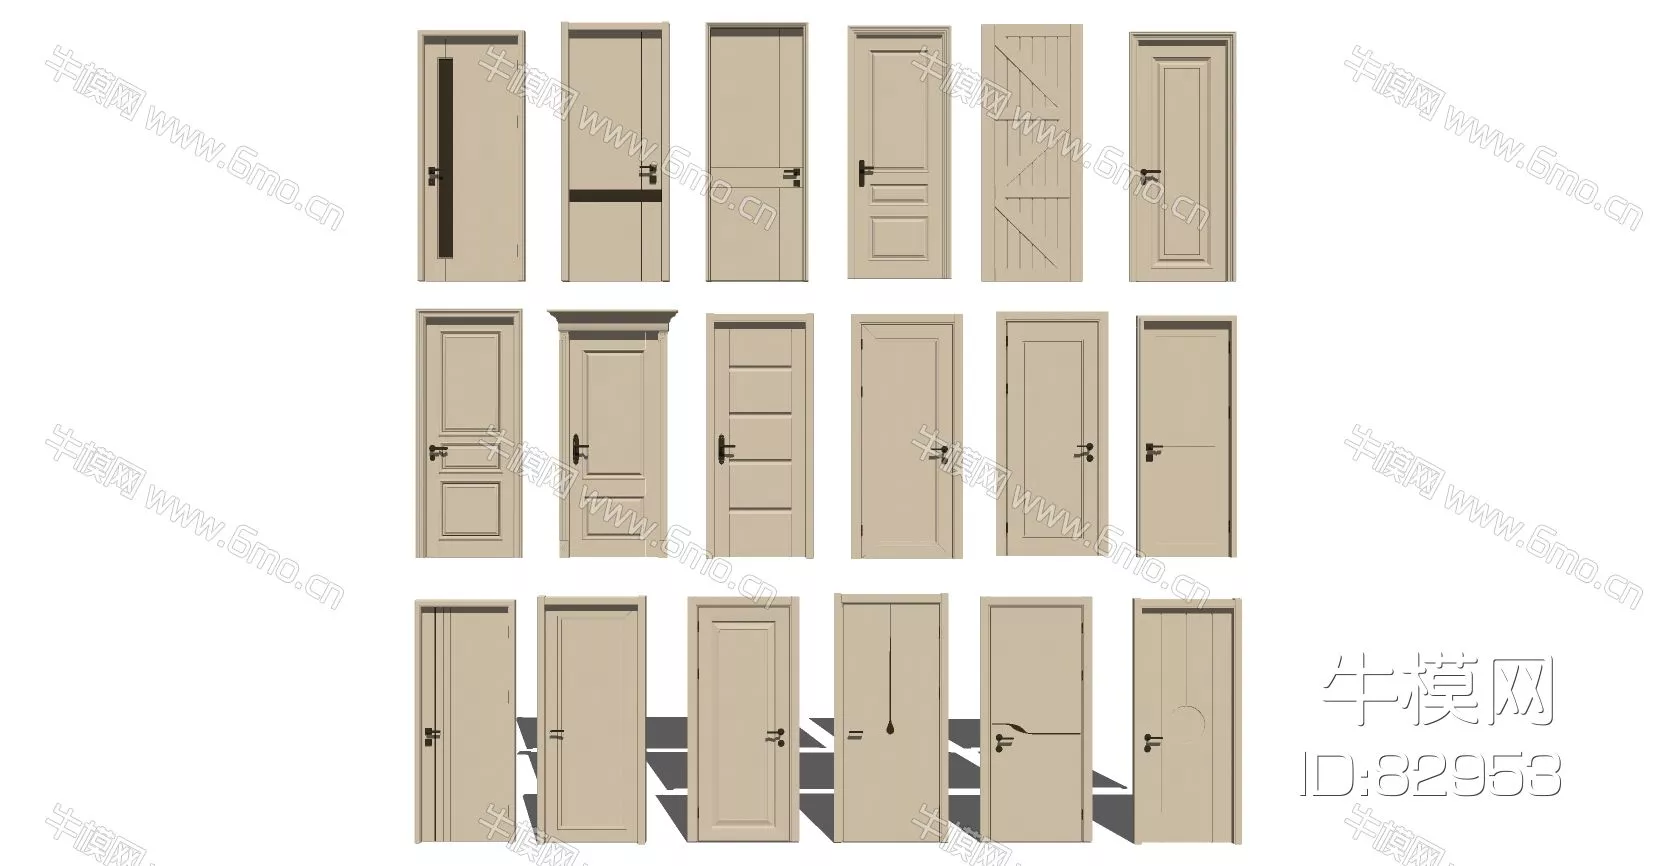 MODERN DOOR AND WINDOWS - SKETCHUP 3D MODEL - ENSCAPE - 82953